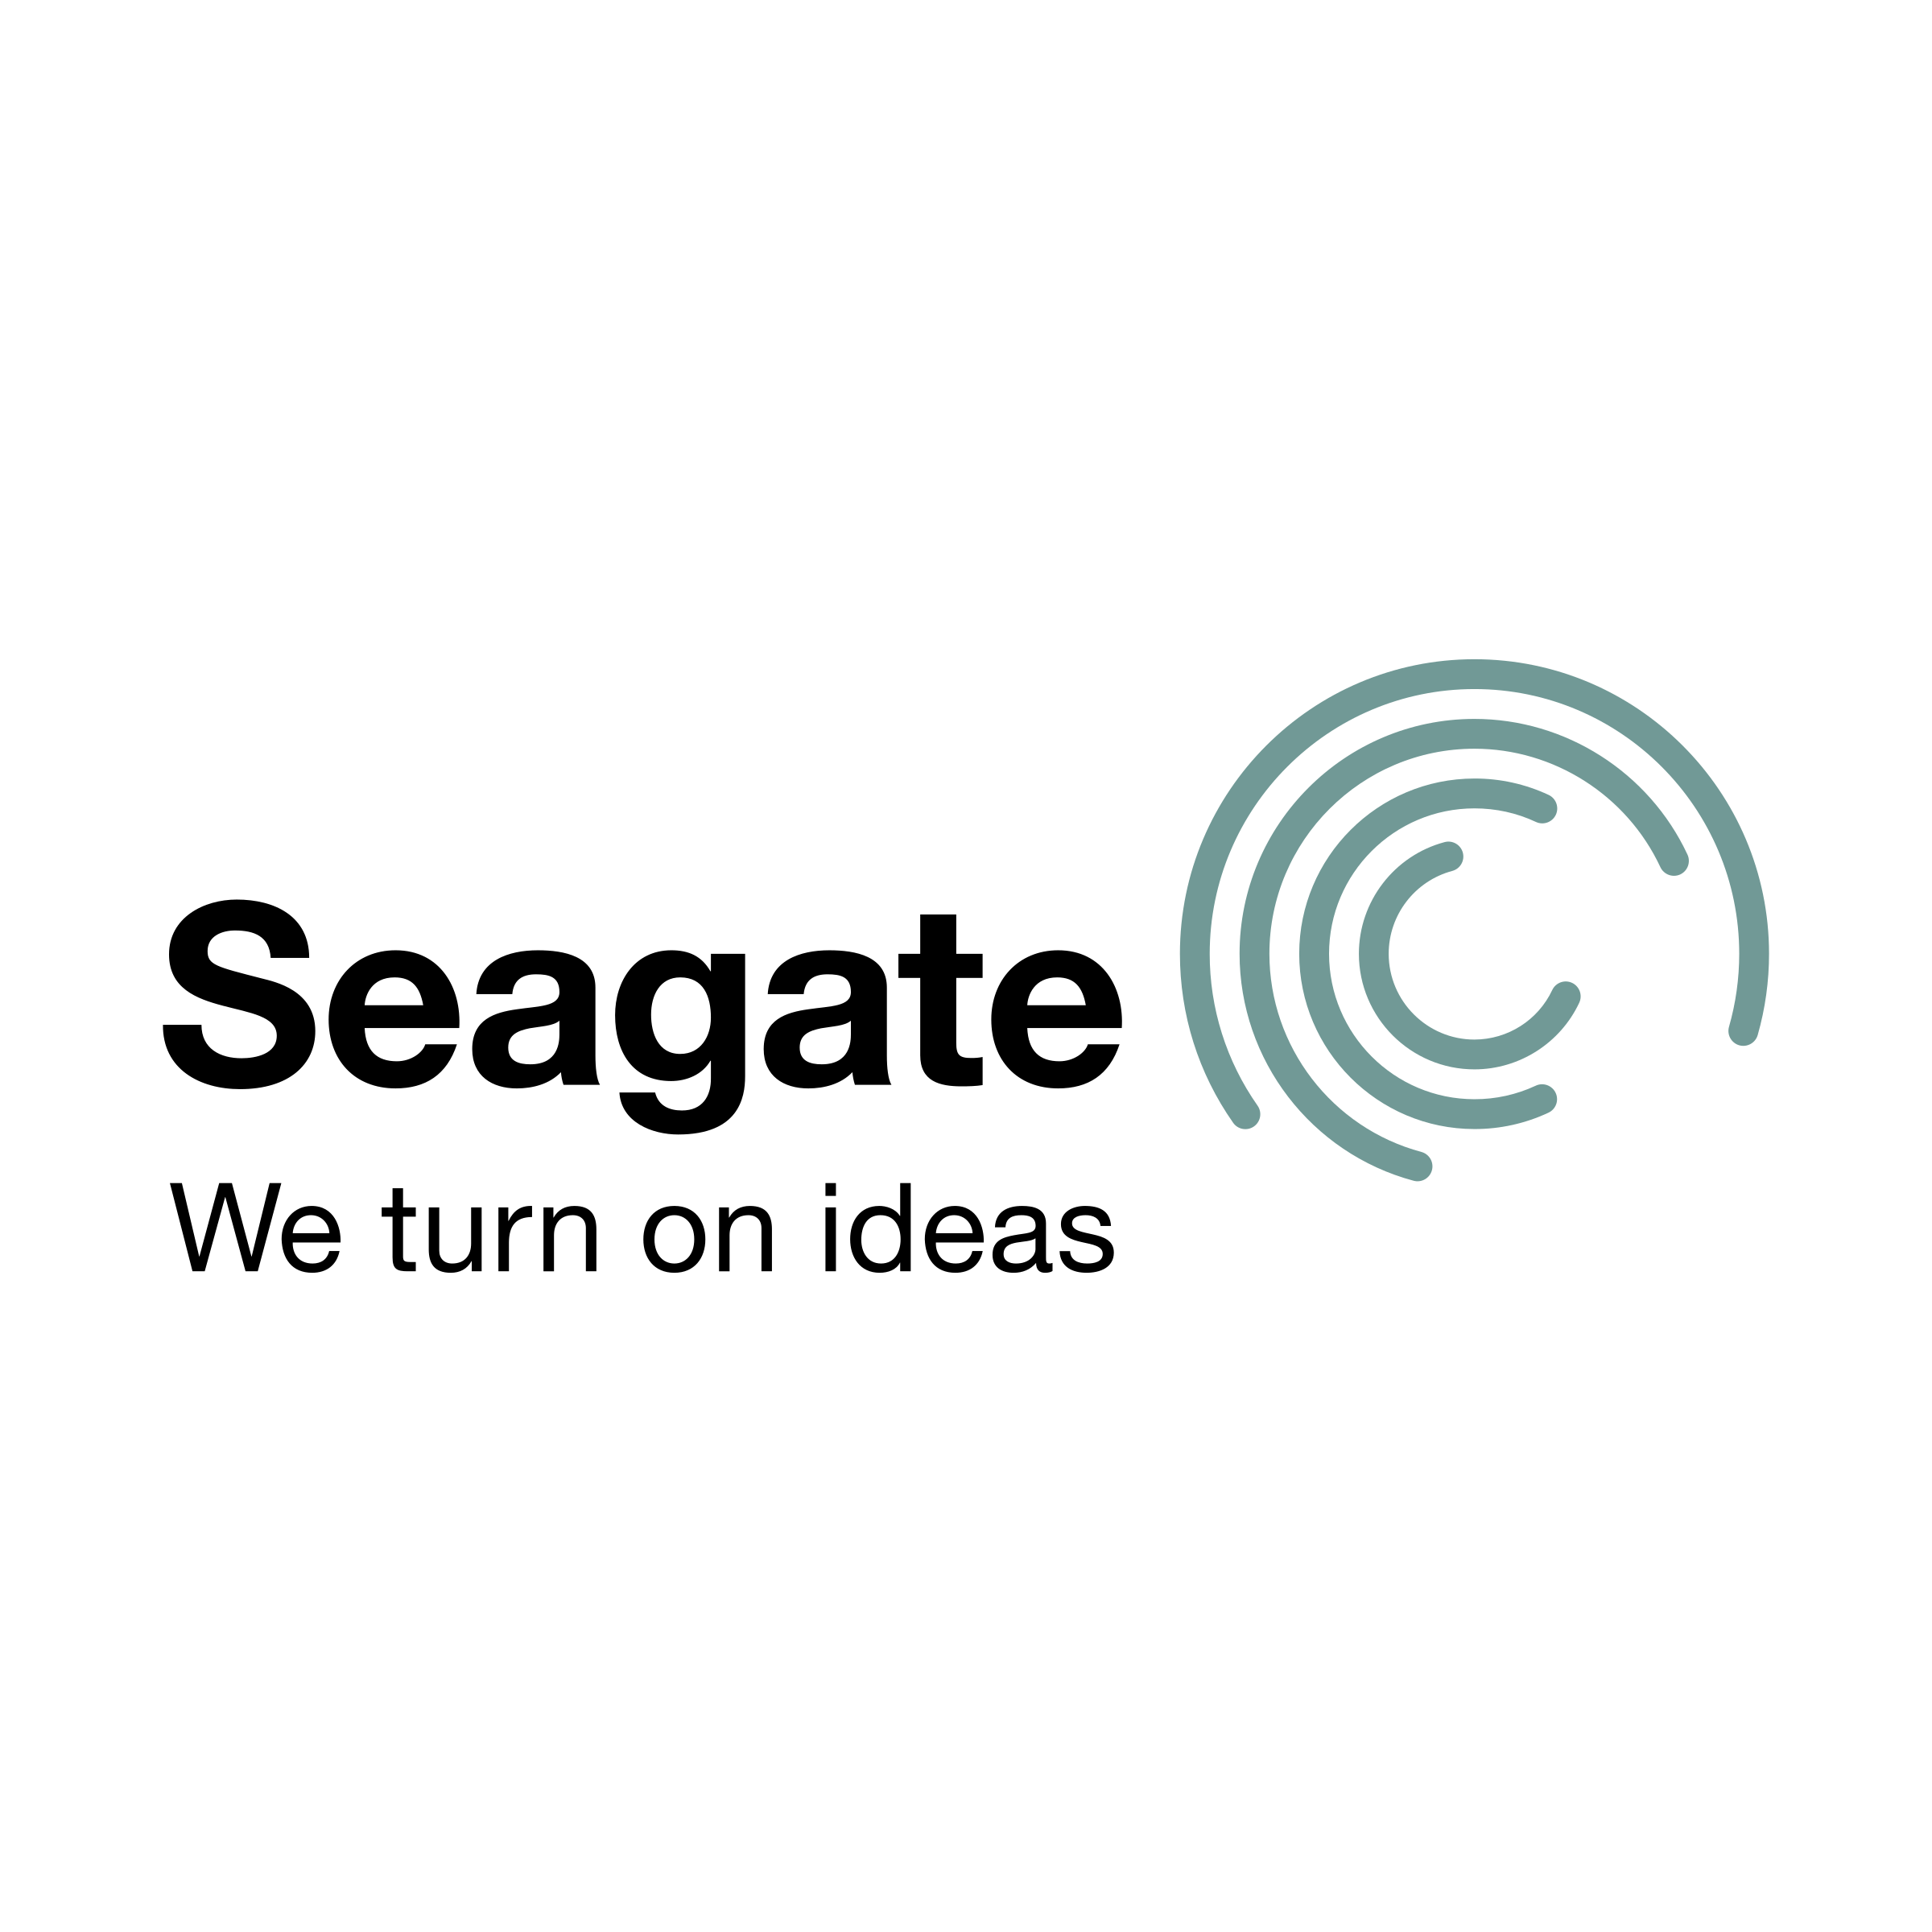 Seagate Logo - Seagate Logo PNG Transparent & SVG Vector - Freebie Supply